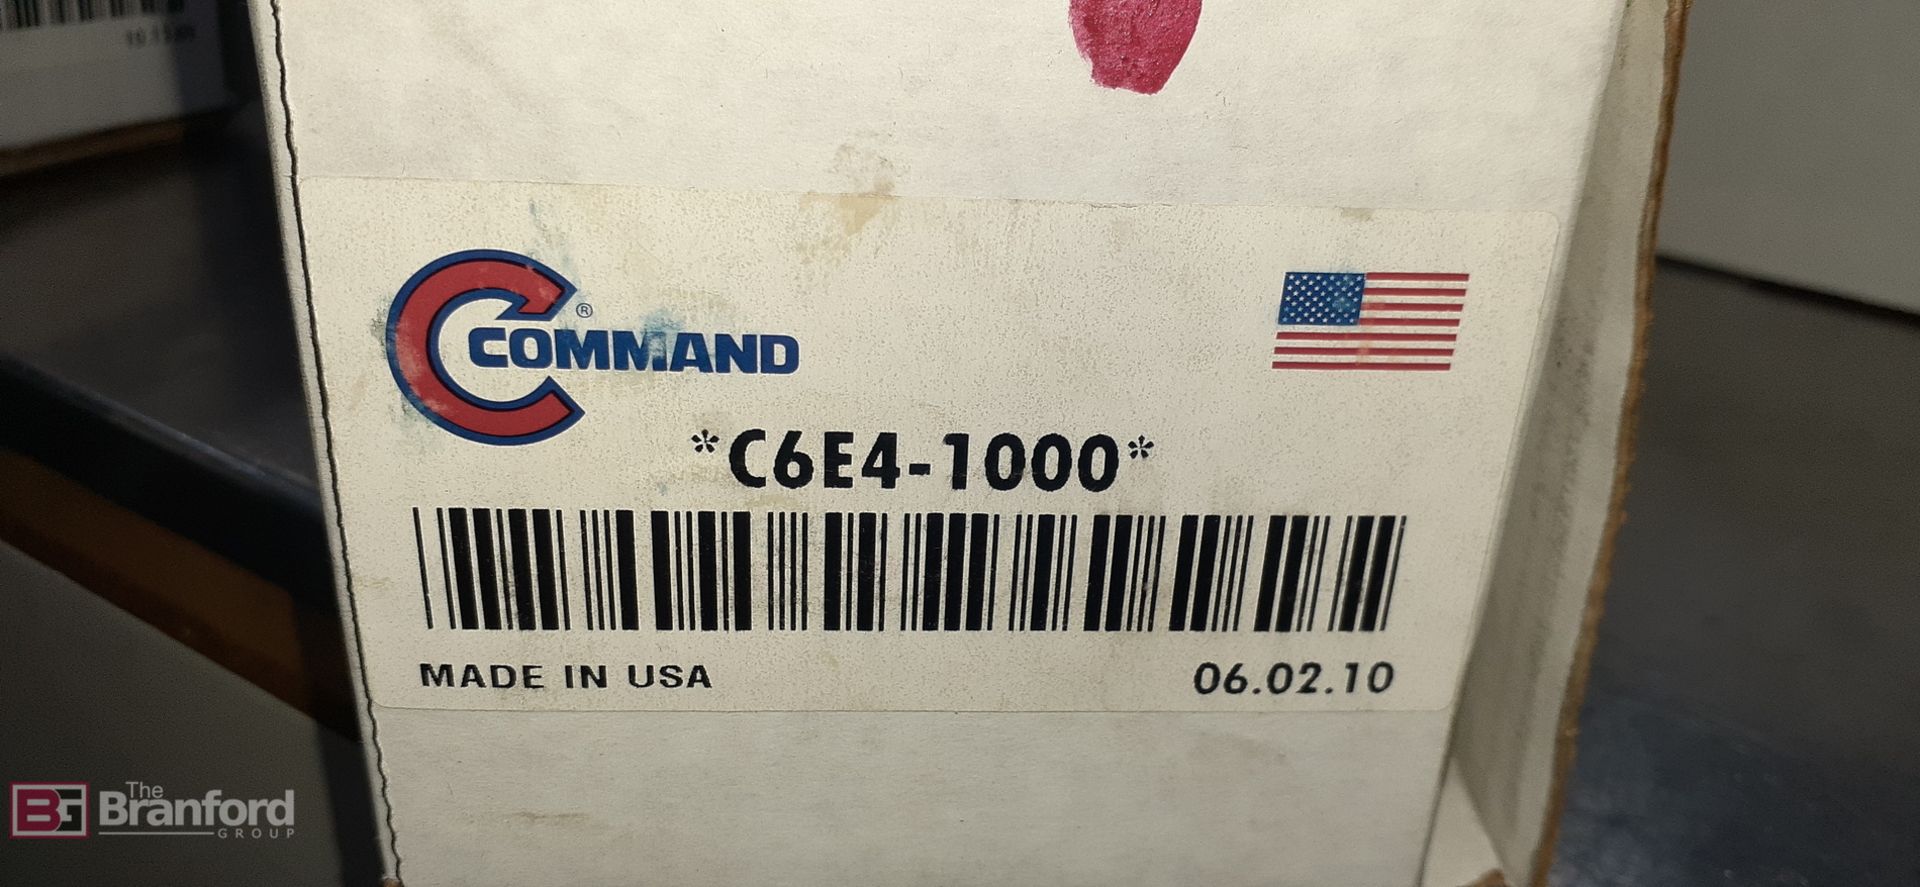 Command C6E4-1000, CAT50 CNC Tool Holder - Image 3 of 4